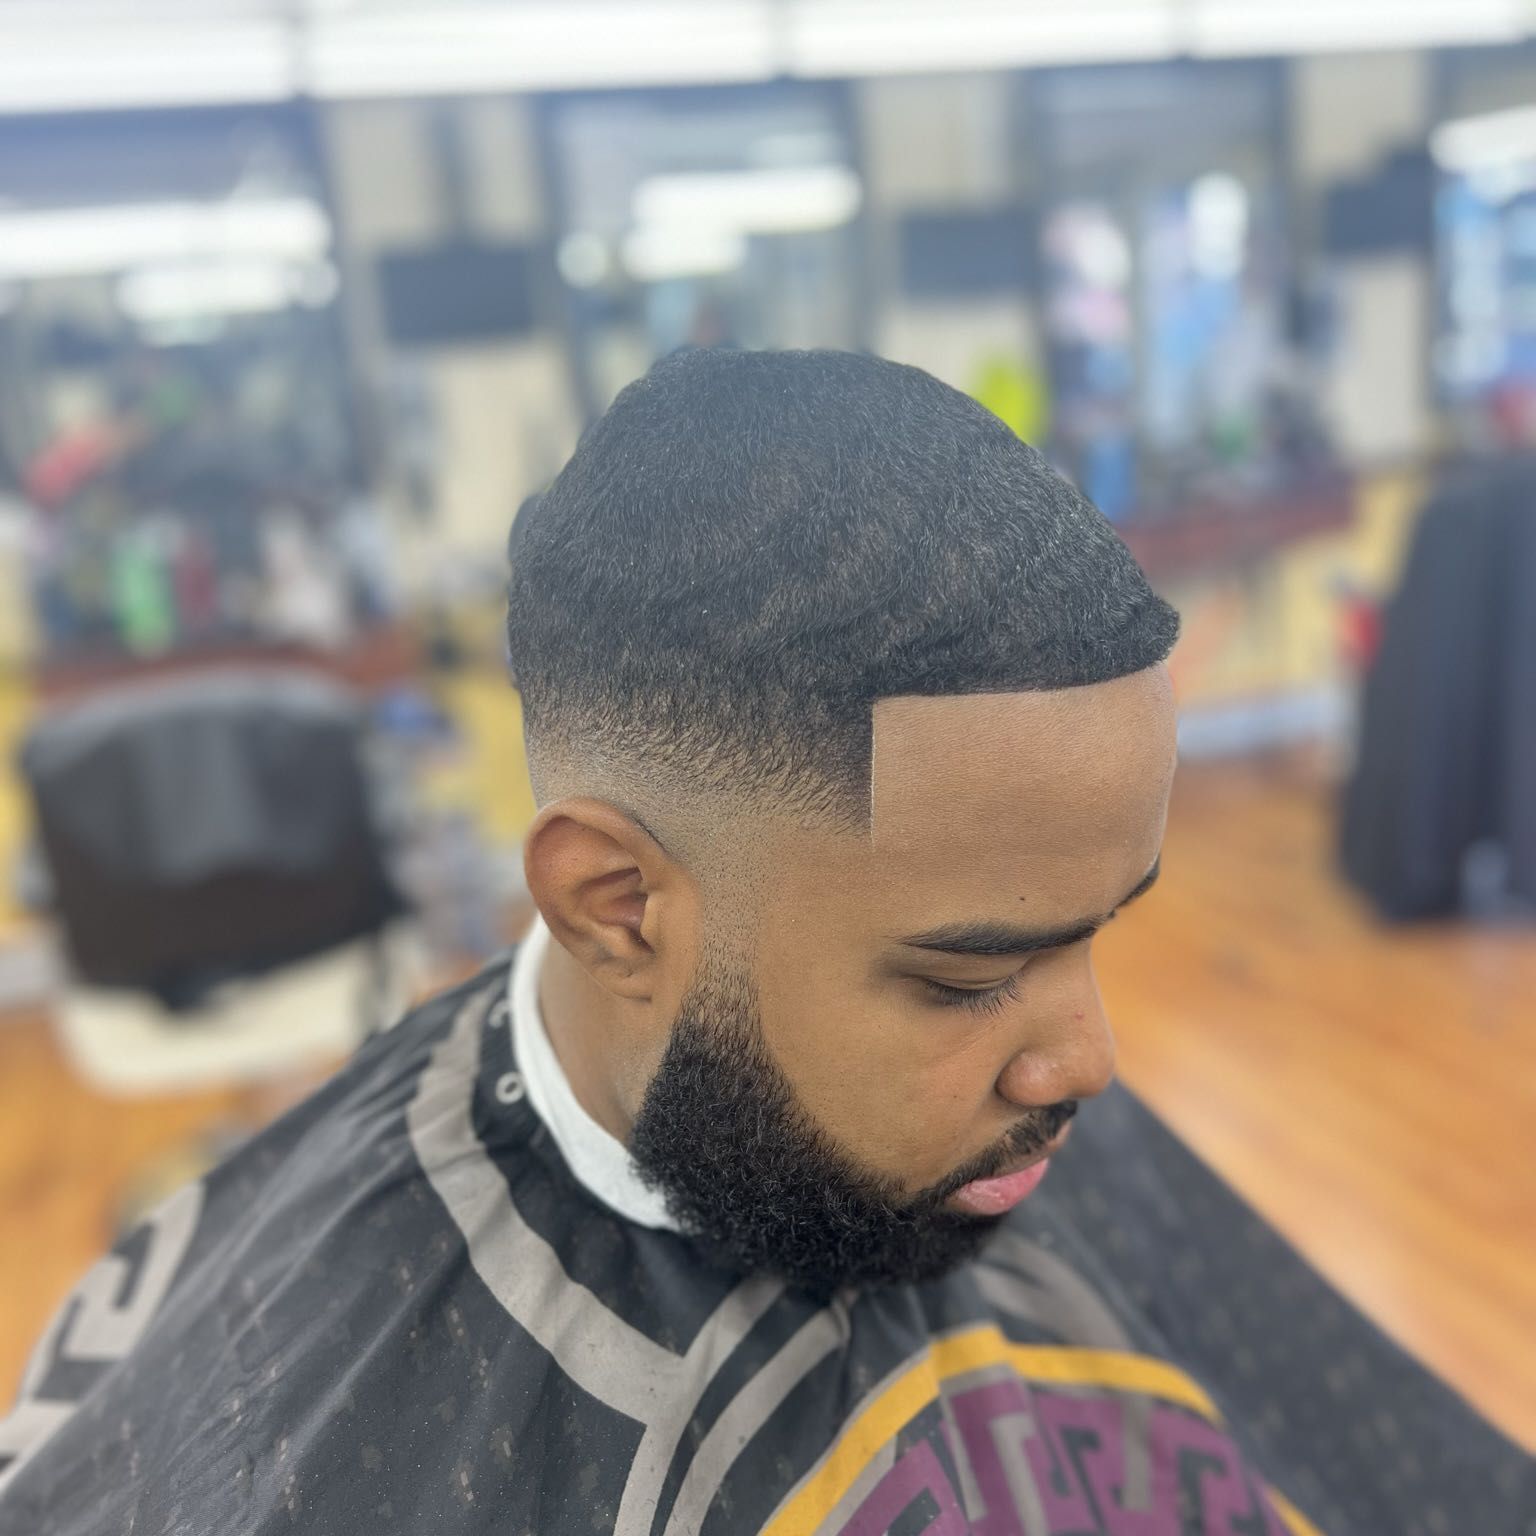 Men’s haircut with beard portfolio